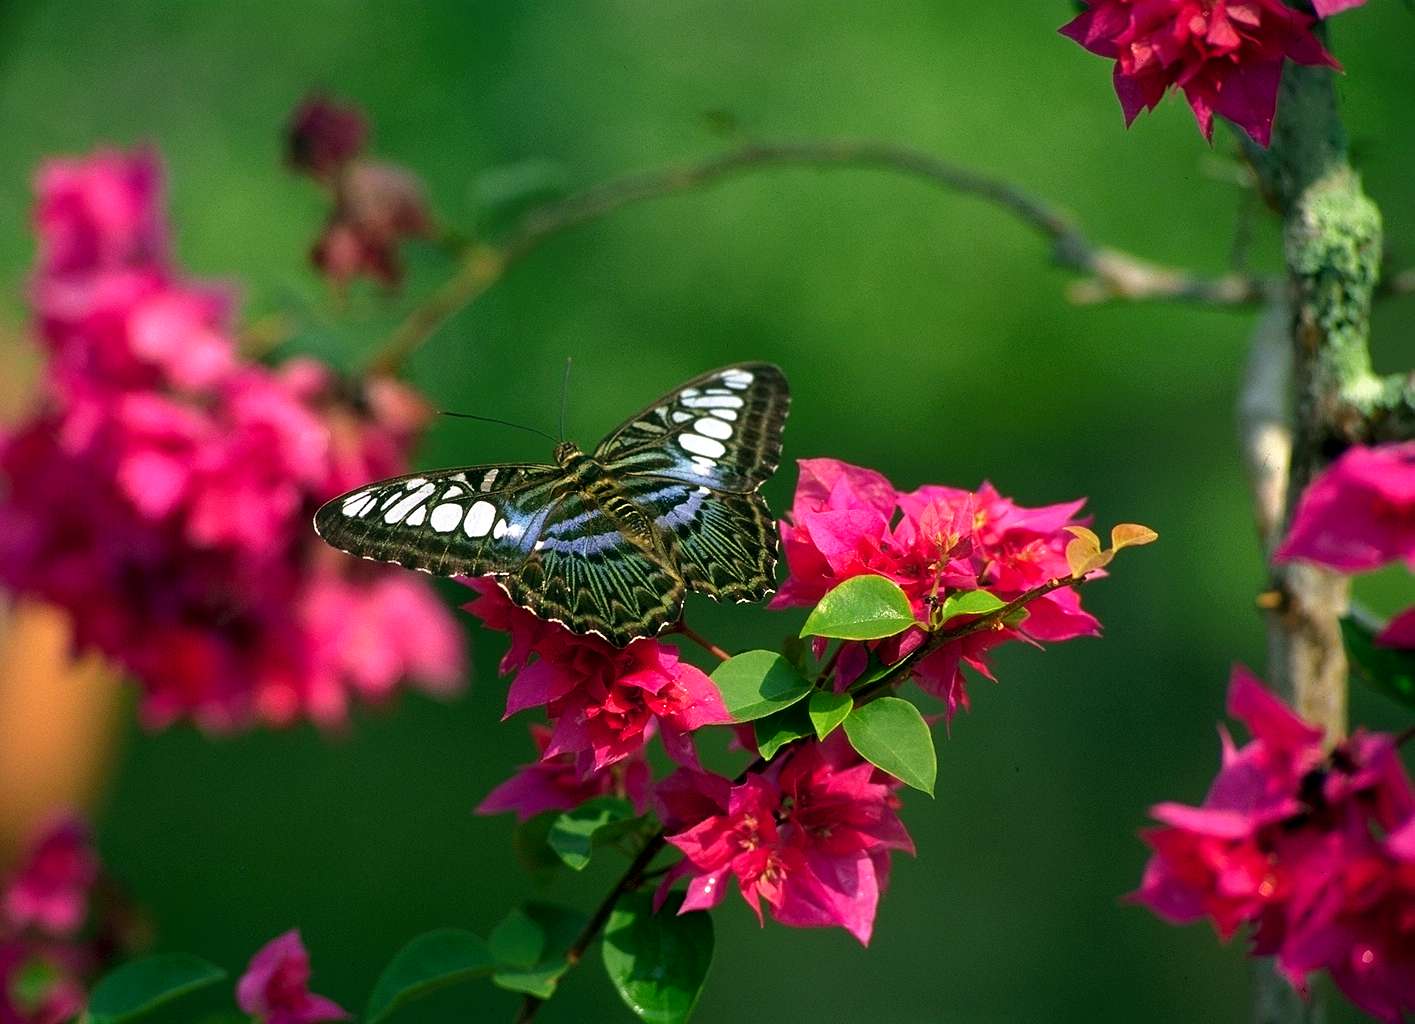 Beautiful Butterflies And Flowers Wallpapers Wallpapersafari